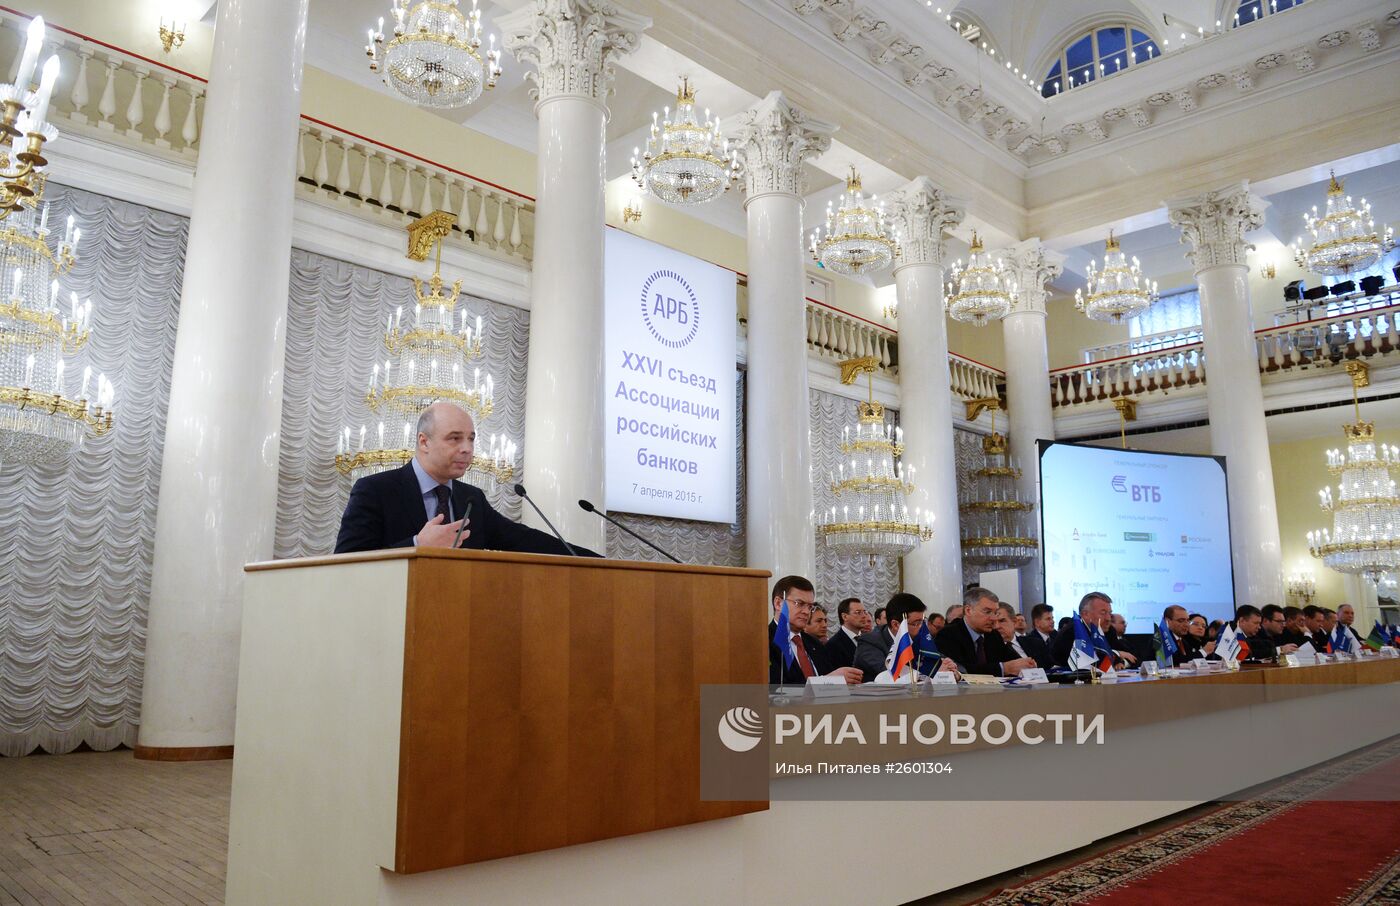 XXVI съезд Ассоциации российских банков